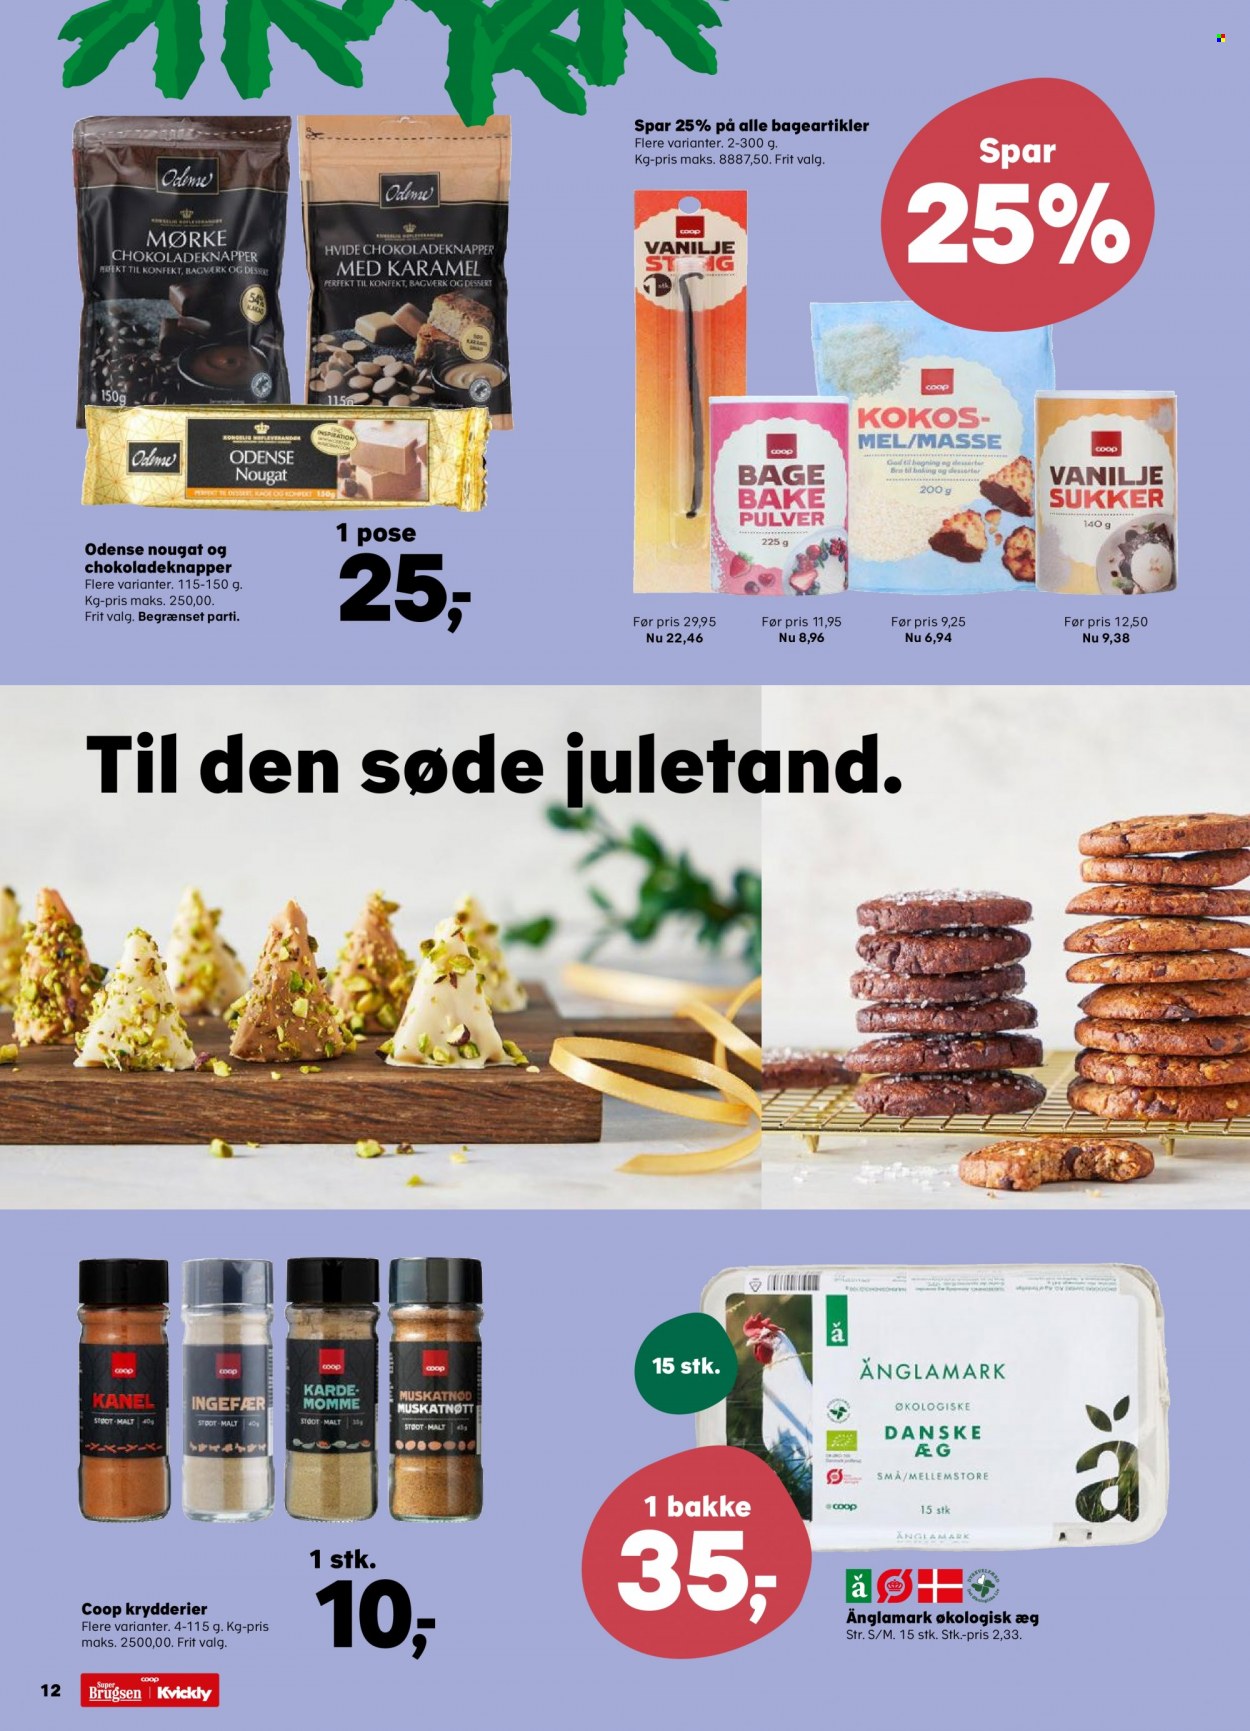 thumbnail - SuperBrugsen tilbud  - 2.12.2022 - 8.12.2022 - tilbudsprodukter - Änglamark, ingefær, sukker, vaniljesukker, mel, vanilje, krydderier, AEG. Side 16.